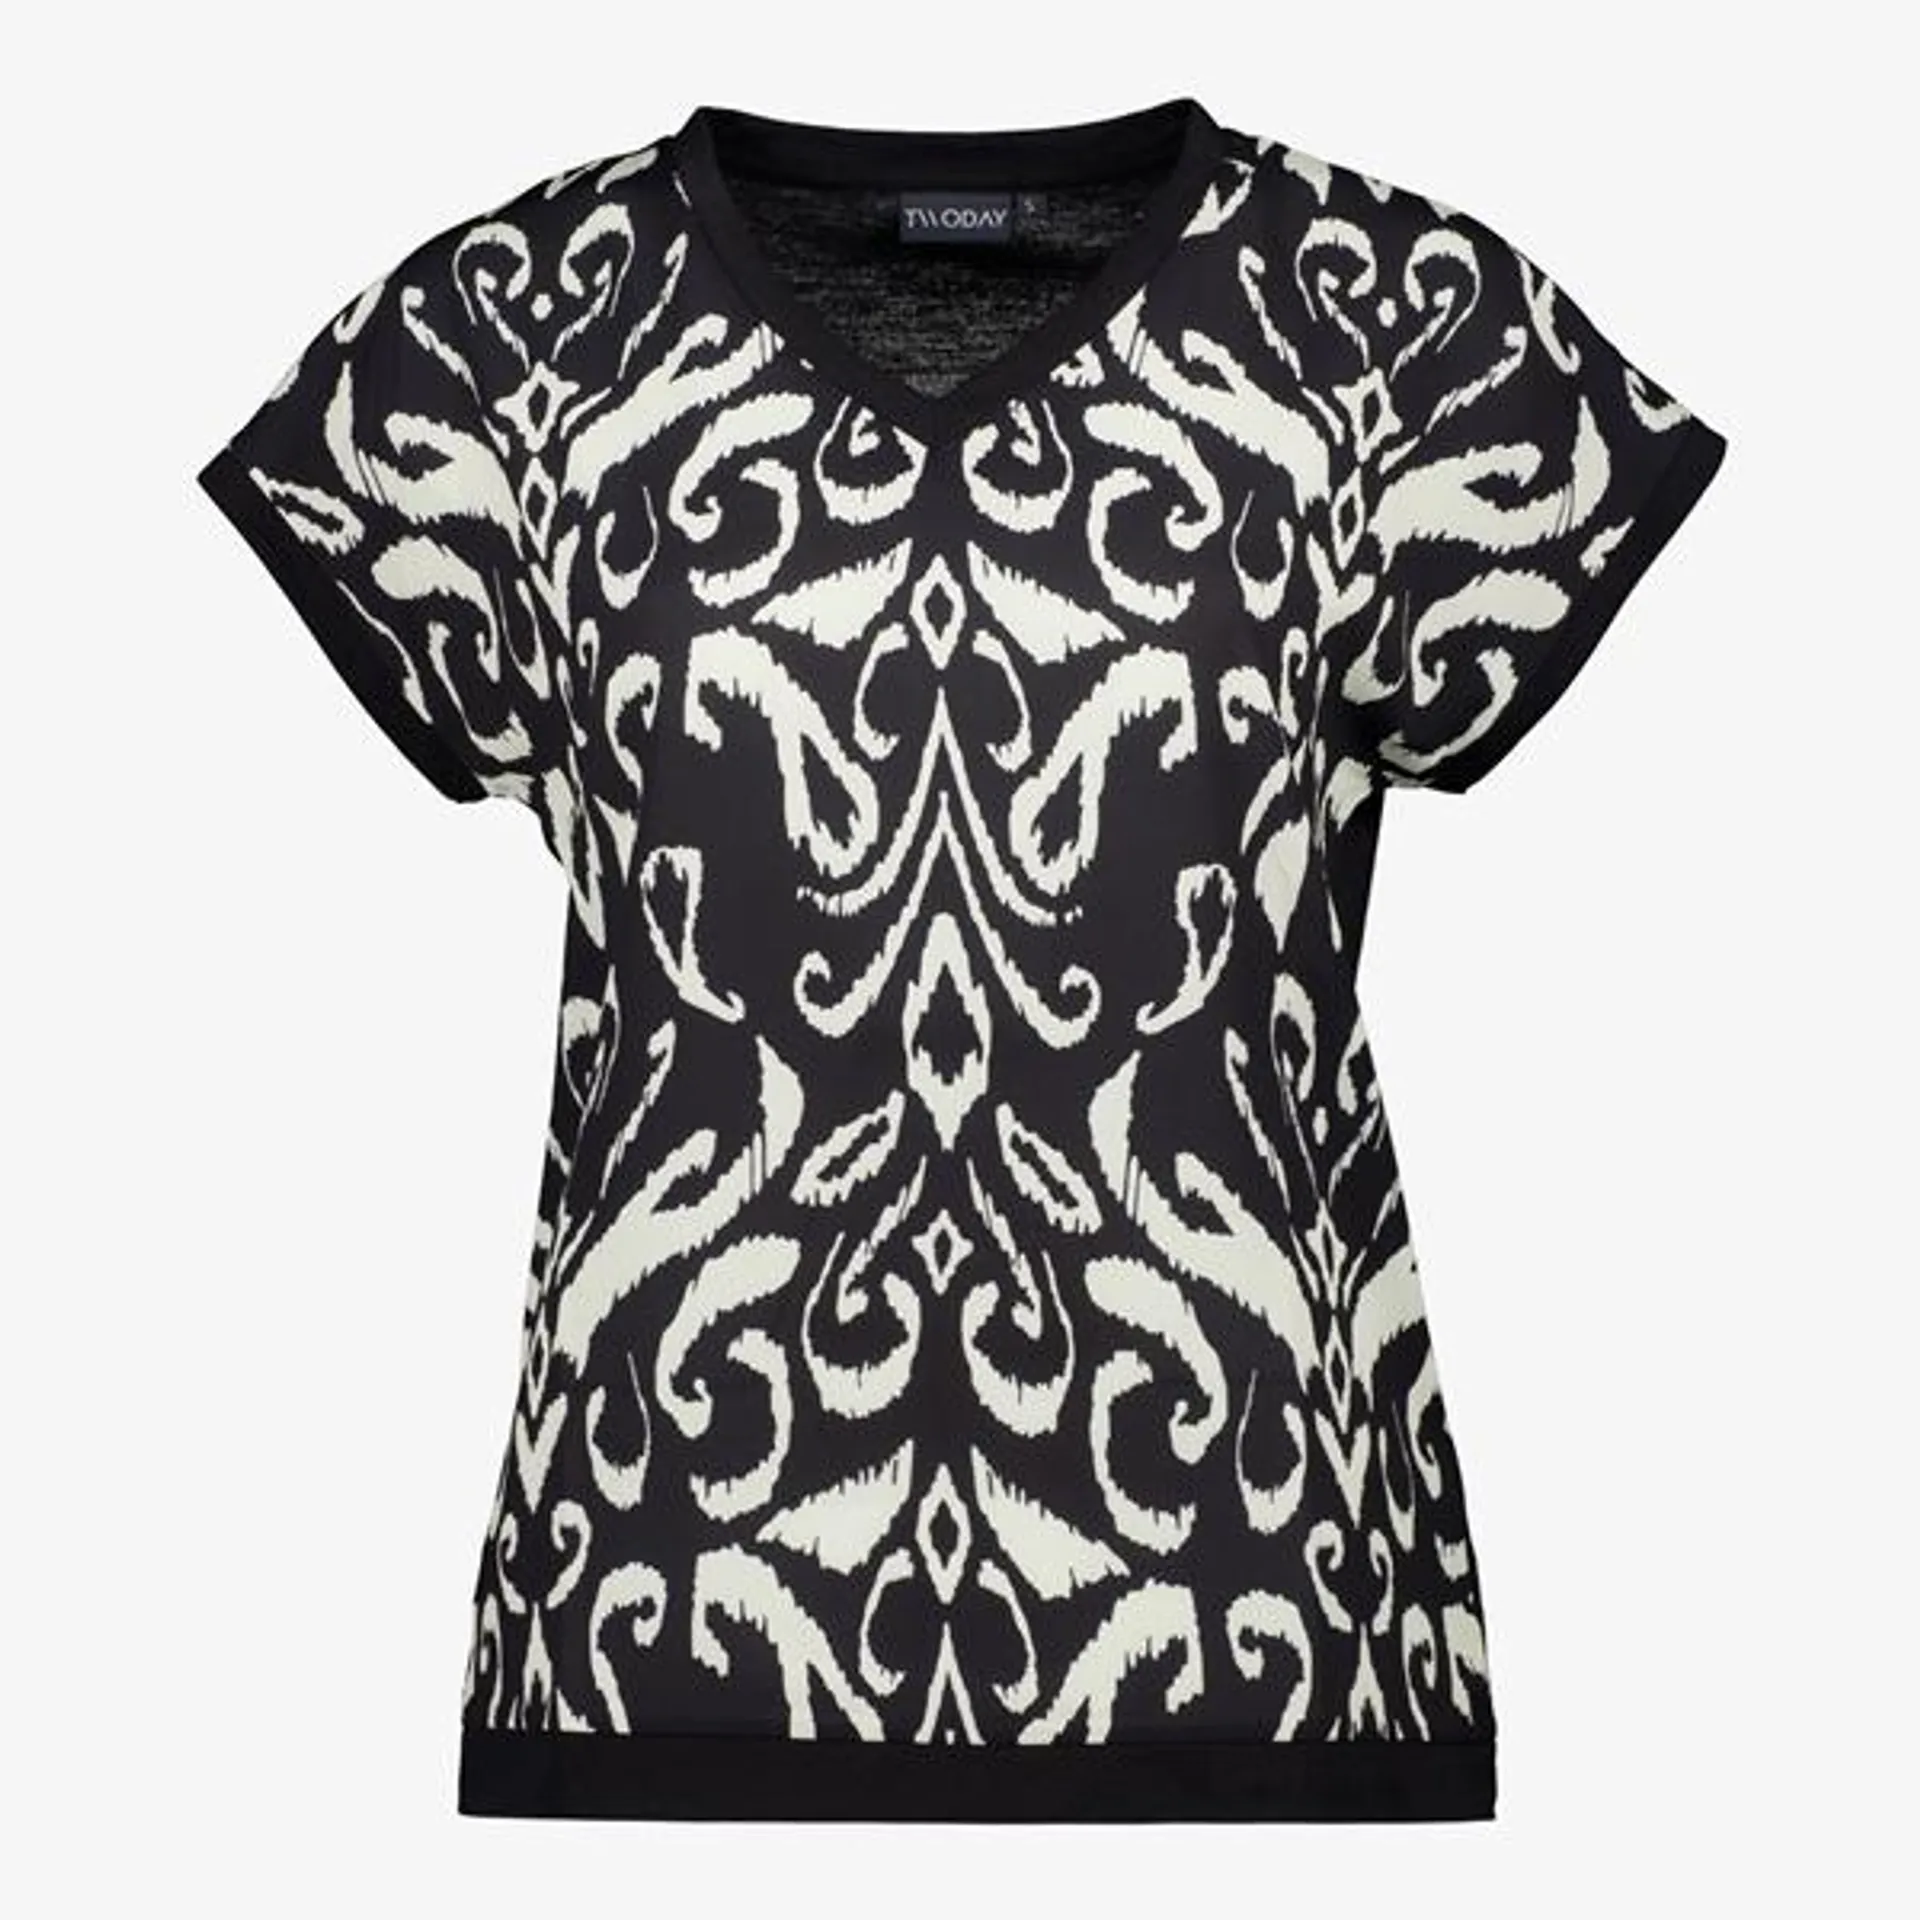 TwoDay dames T-shirt zwart met paisley print